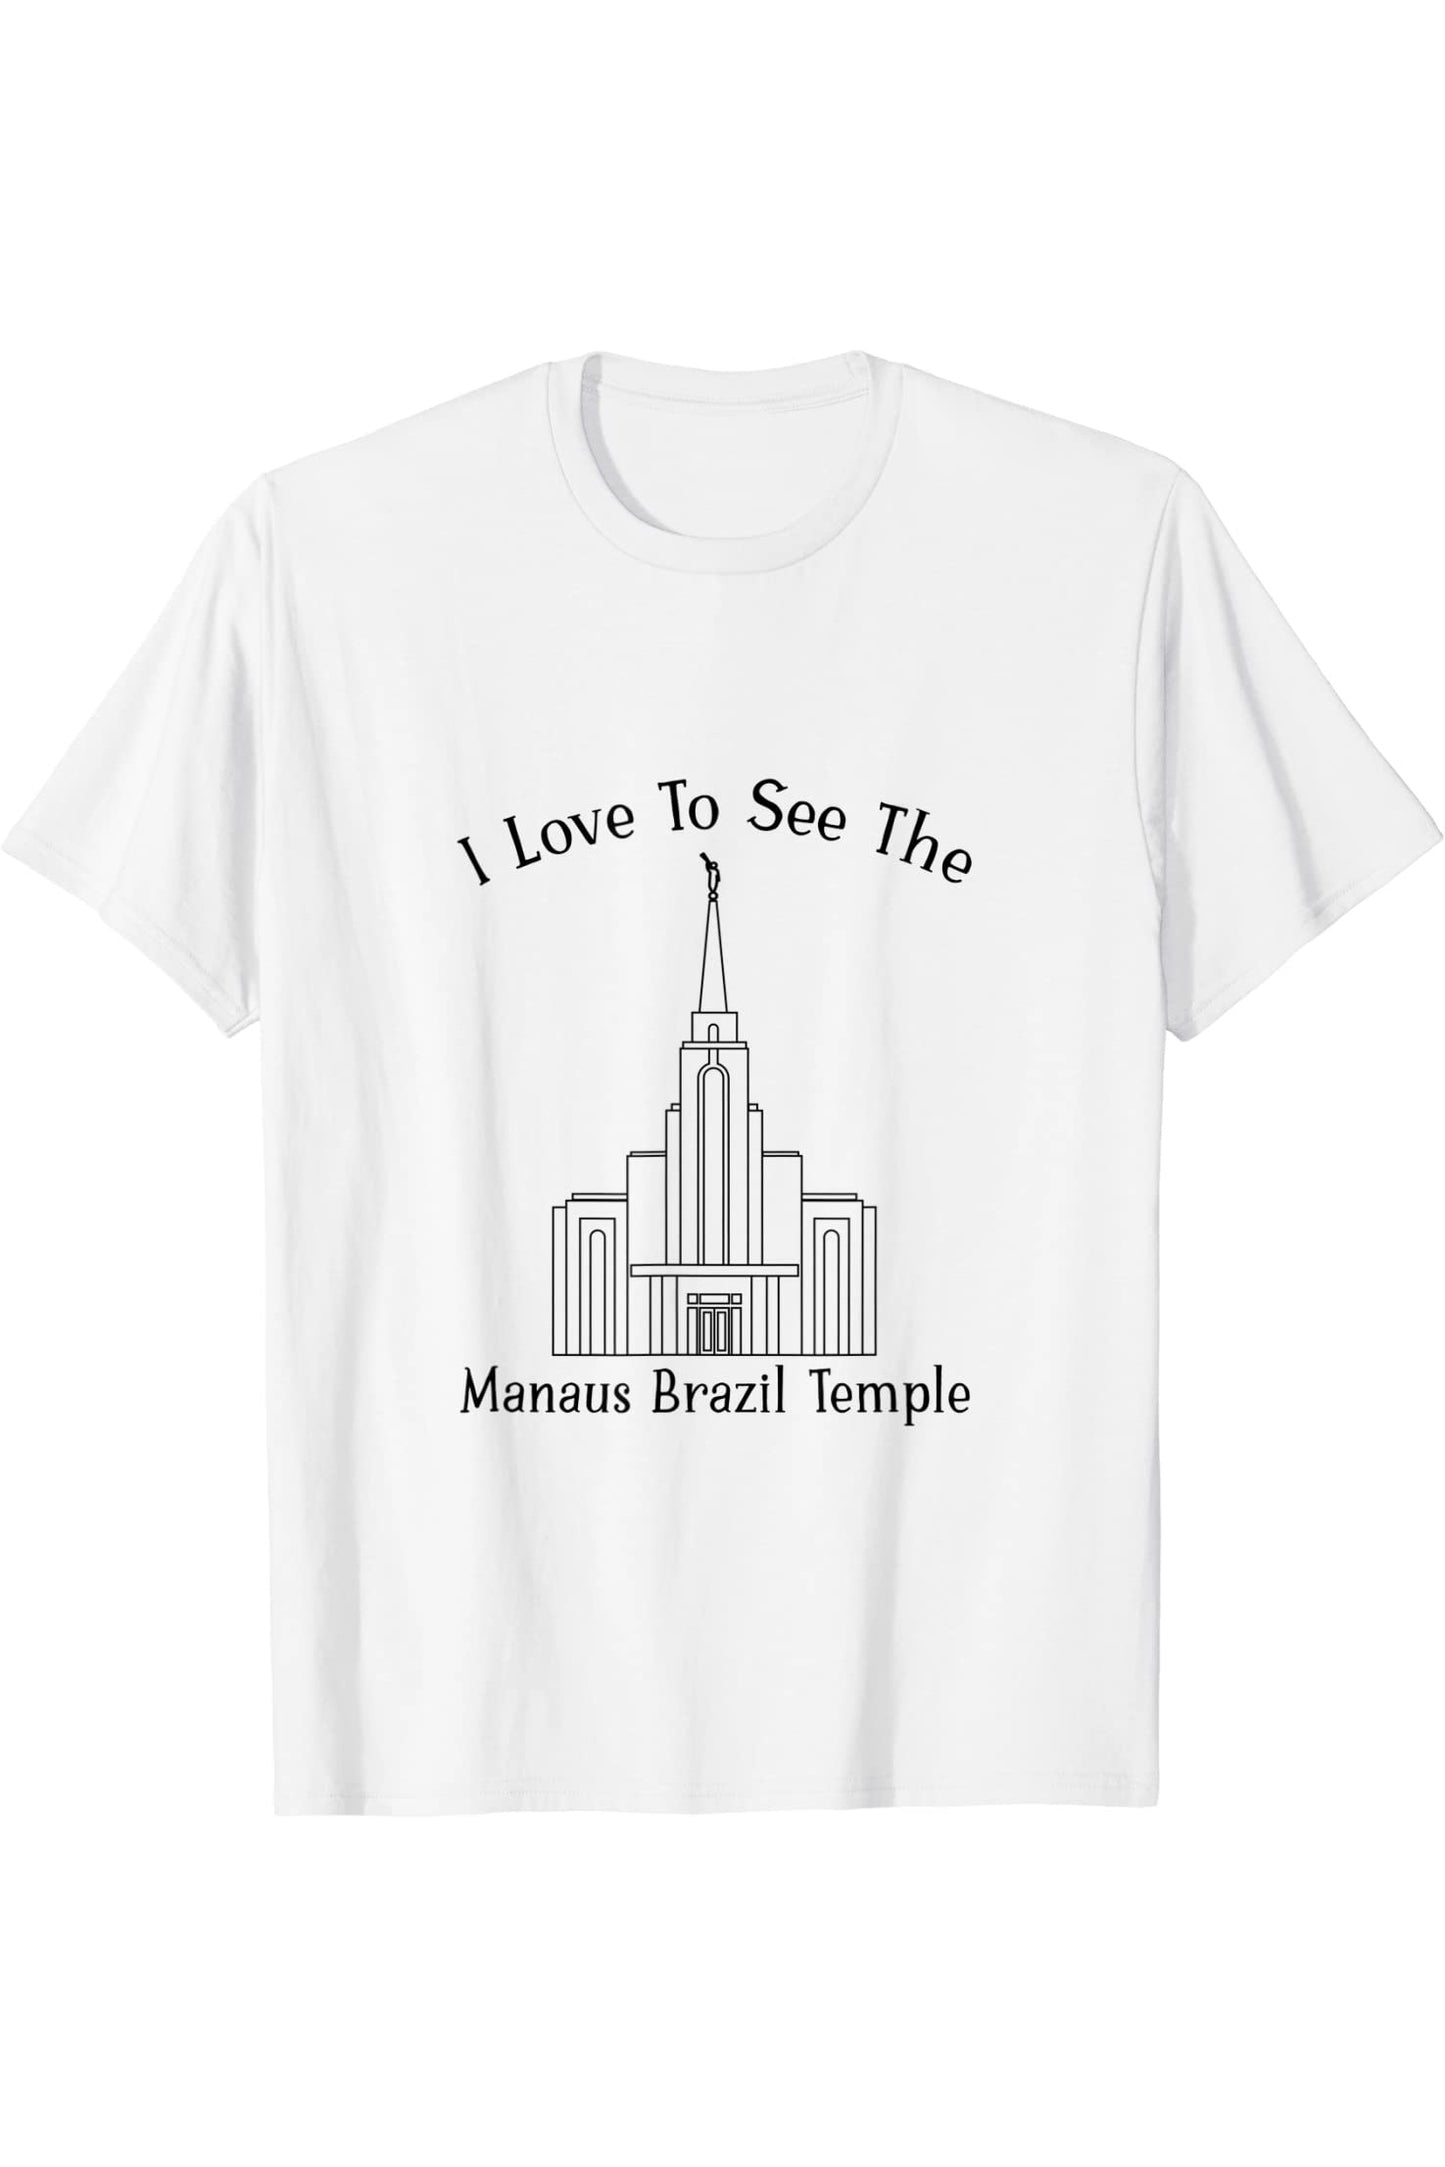 Manaus Brazil Temple T-Shirt - Happy Style (English) US